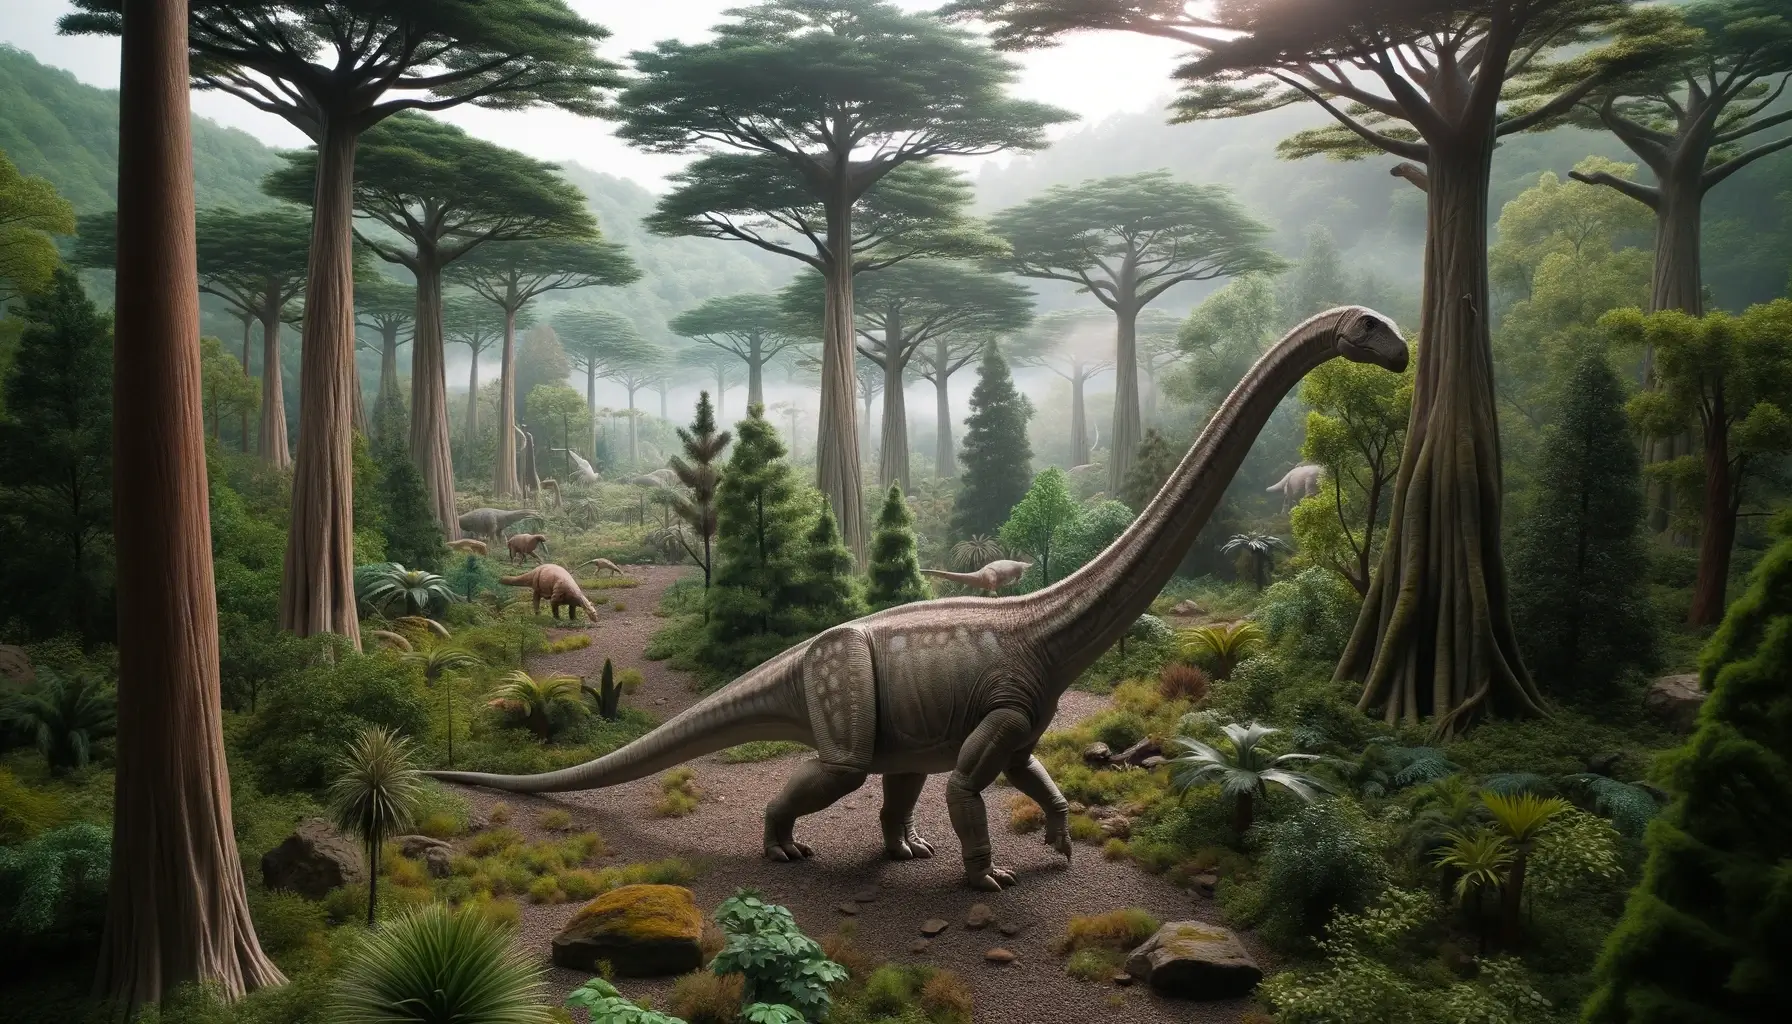 Amygdalodon dinosaur in its dense forest habitat during the Late Jurassic.